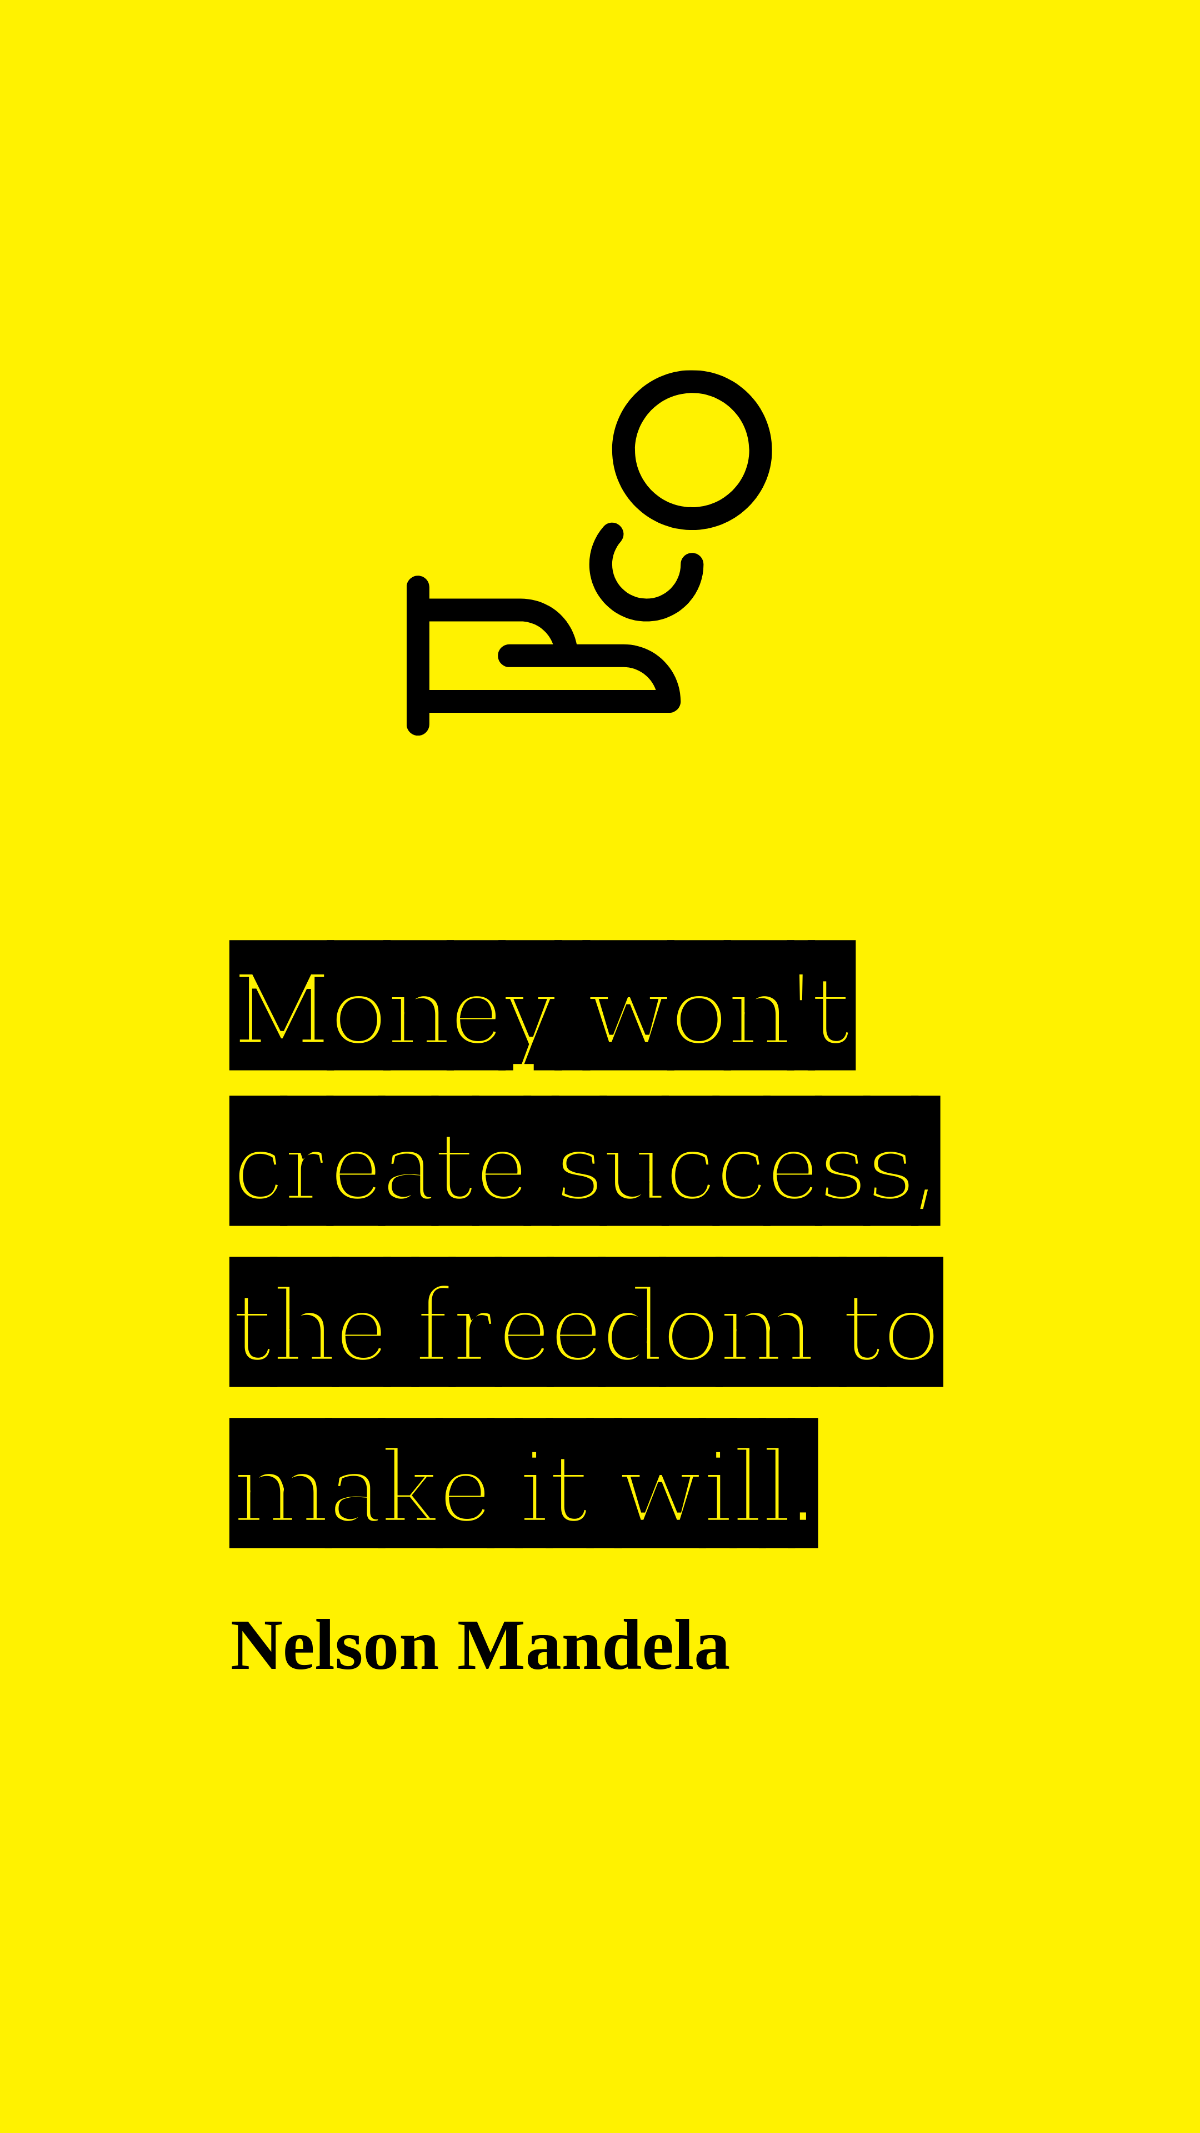 Nelson Mandela - Money won't create success, the freedom to make it will.